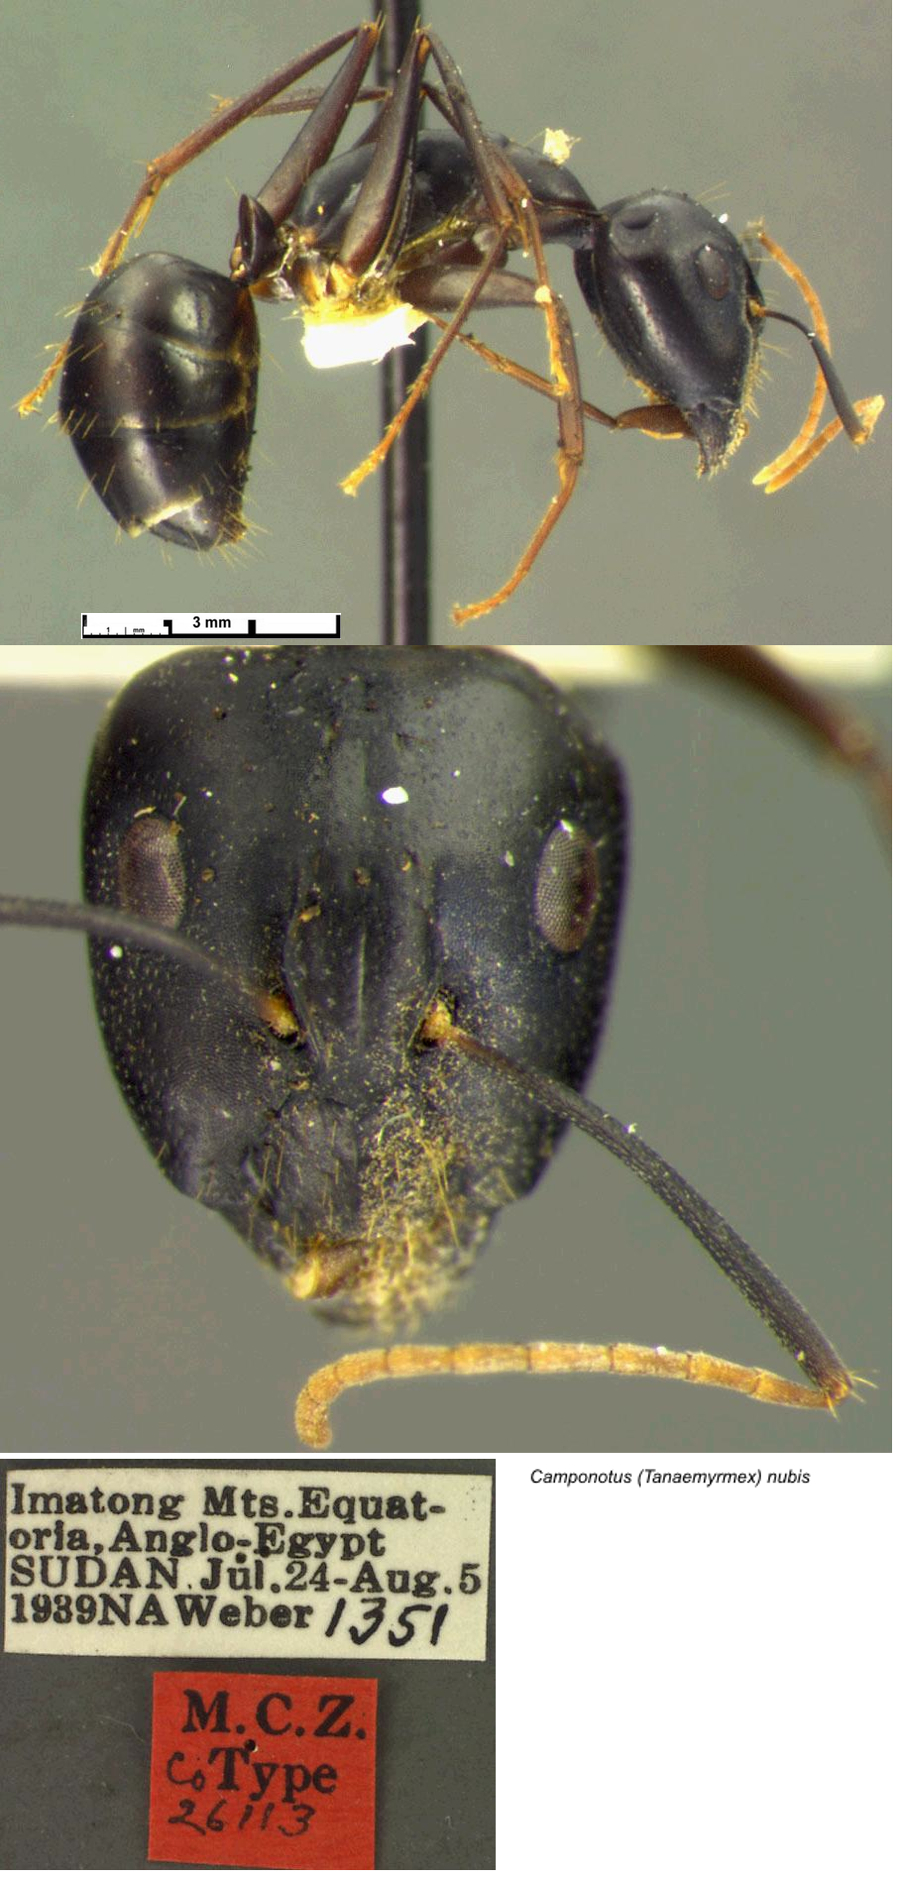 Camponotus nubis major